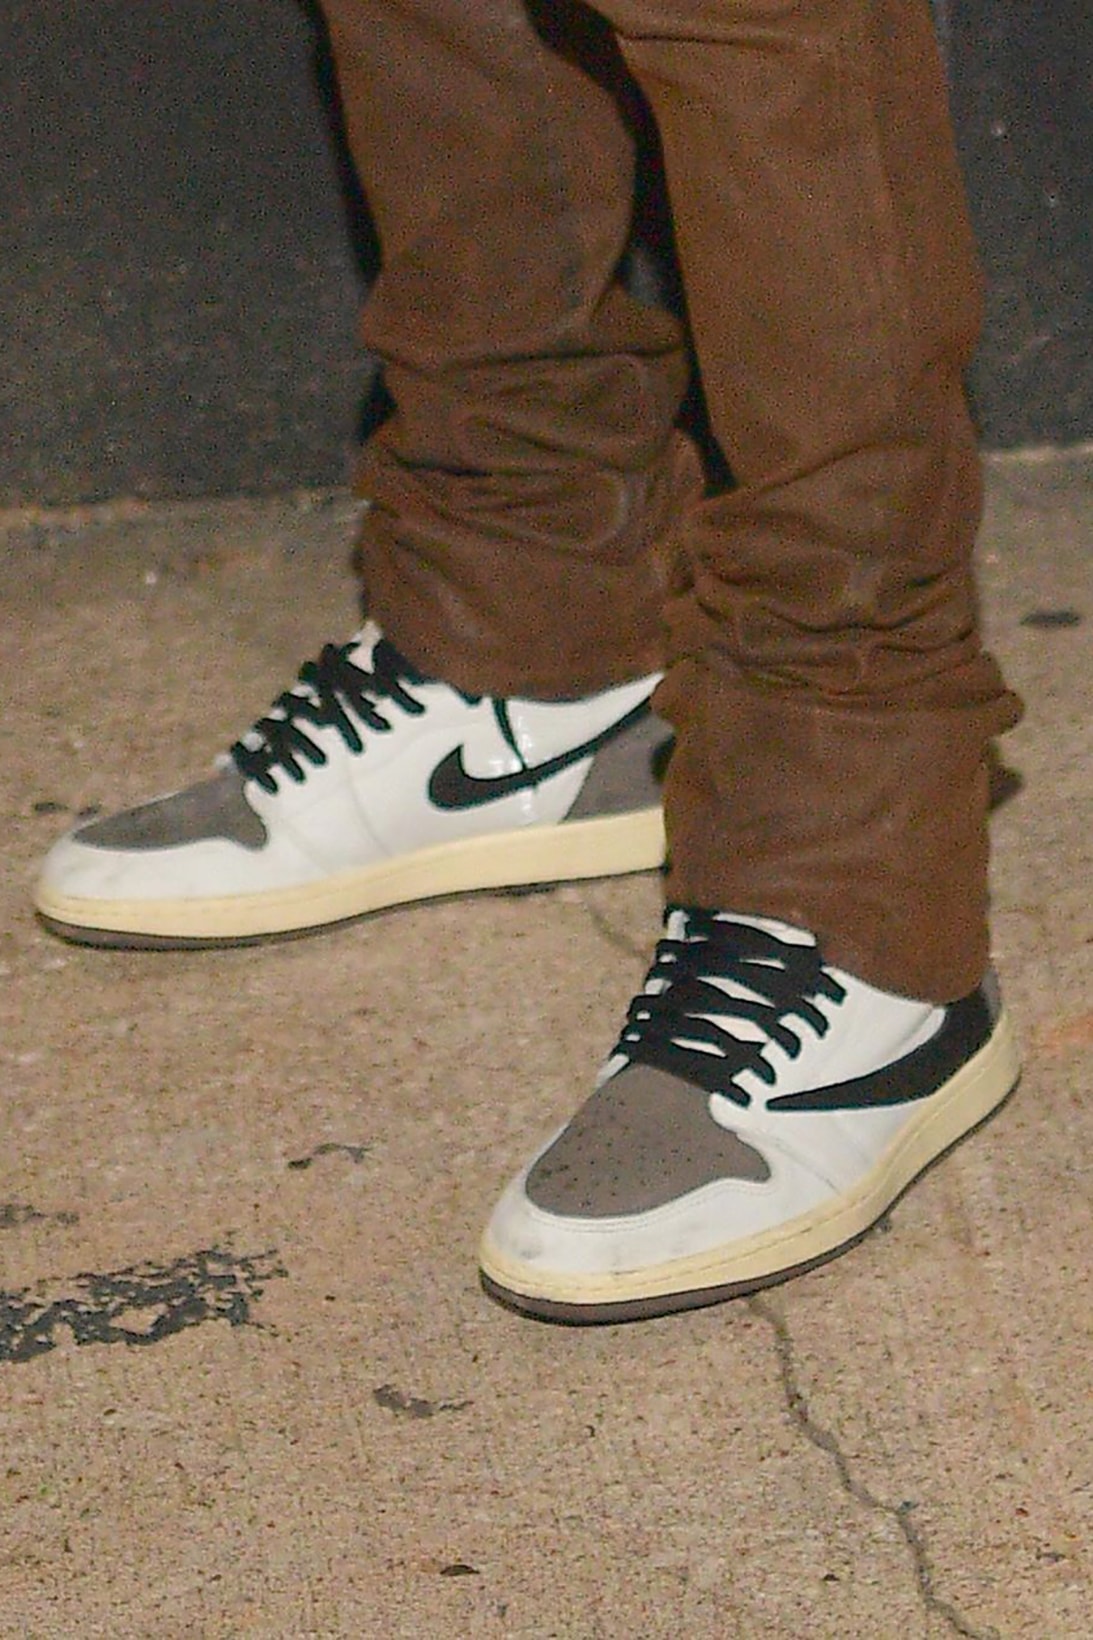 nike travis scott collaboration air jordan 1 high sneaekrs reverse white brown colorway on feet footwear sneakerhead shoes